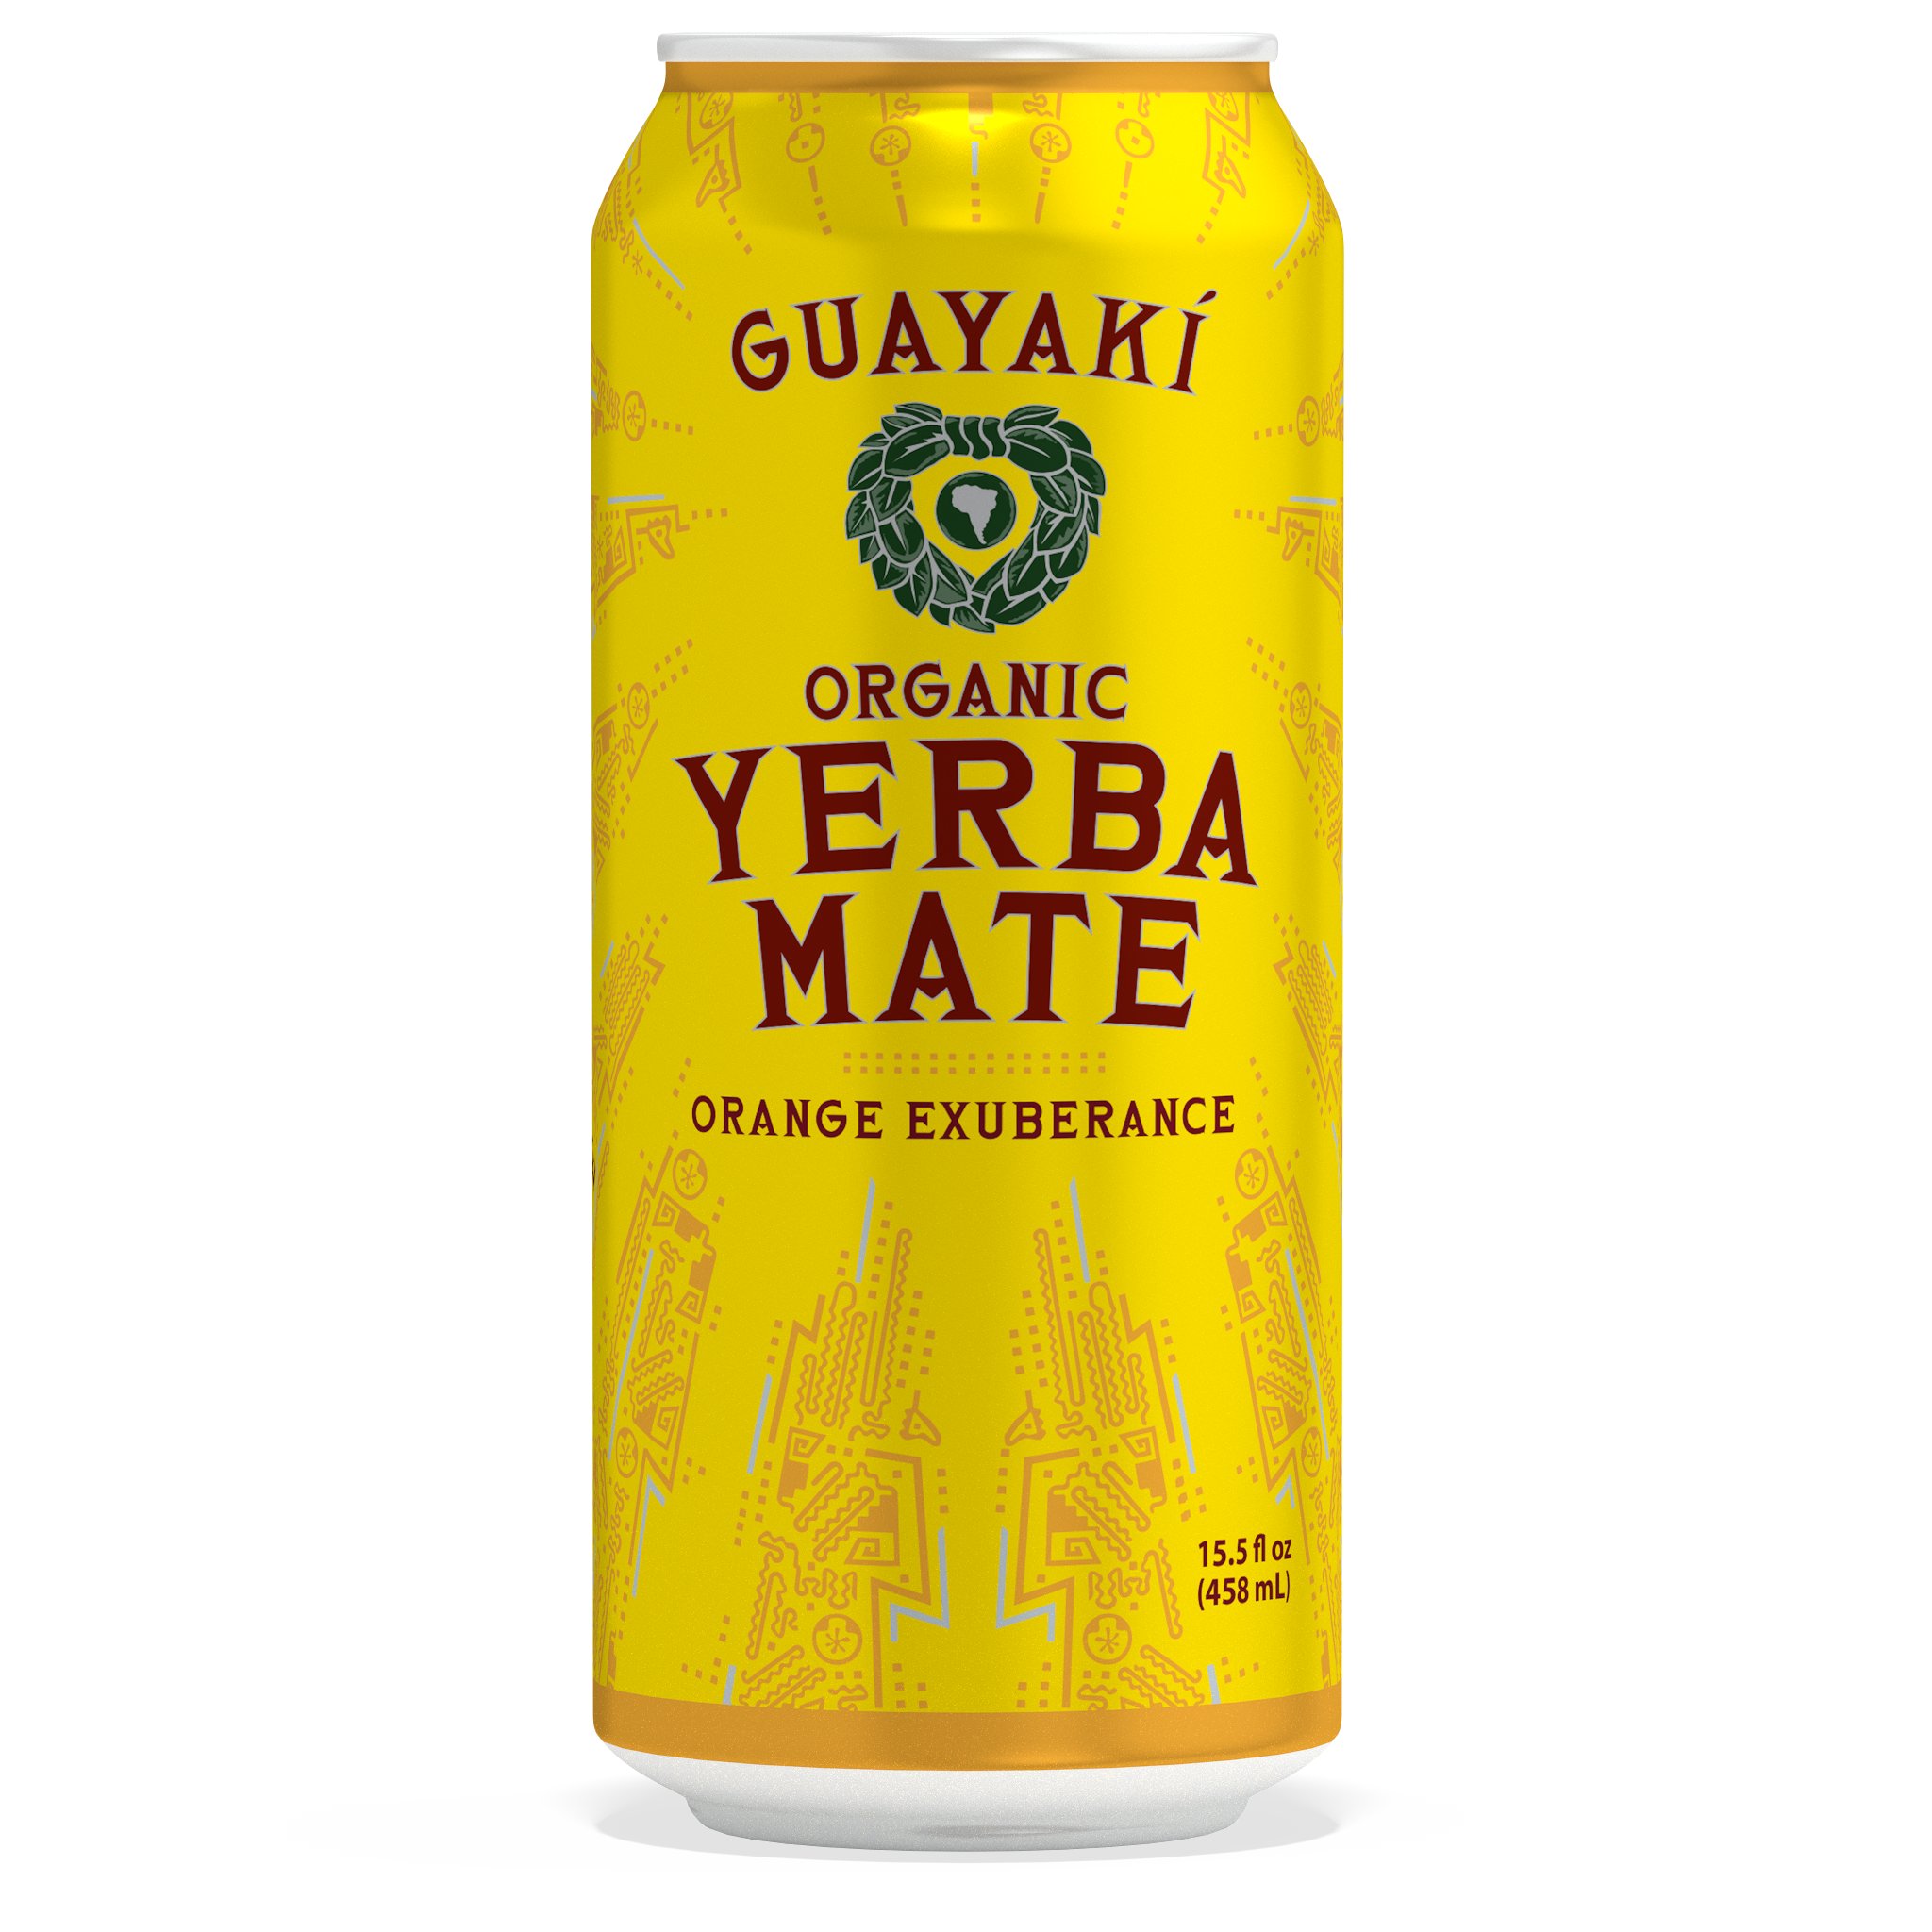 Guayaki Yerba Mate Organic Bluephoria Energy Drink, 15.5 fl oz